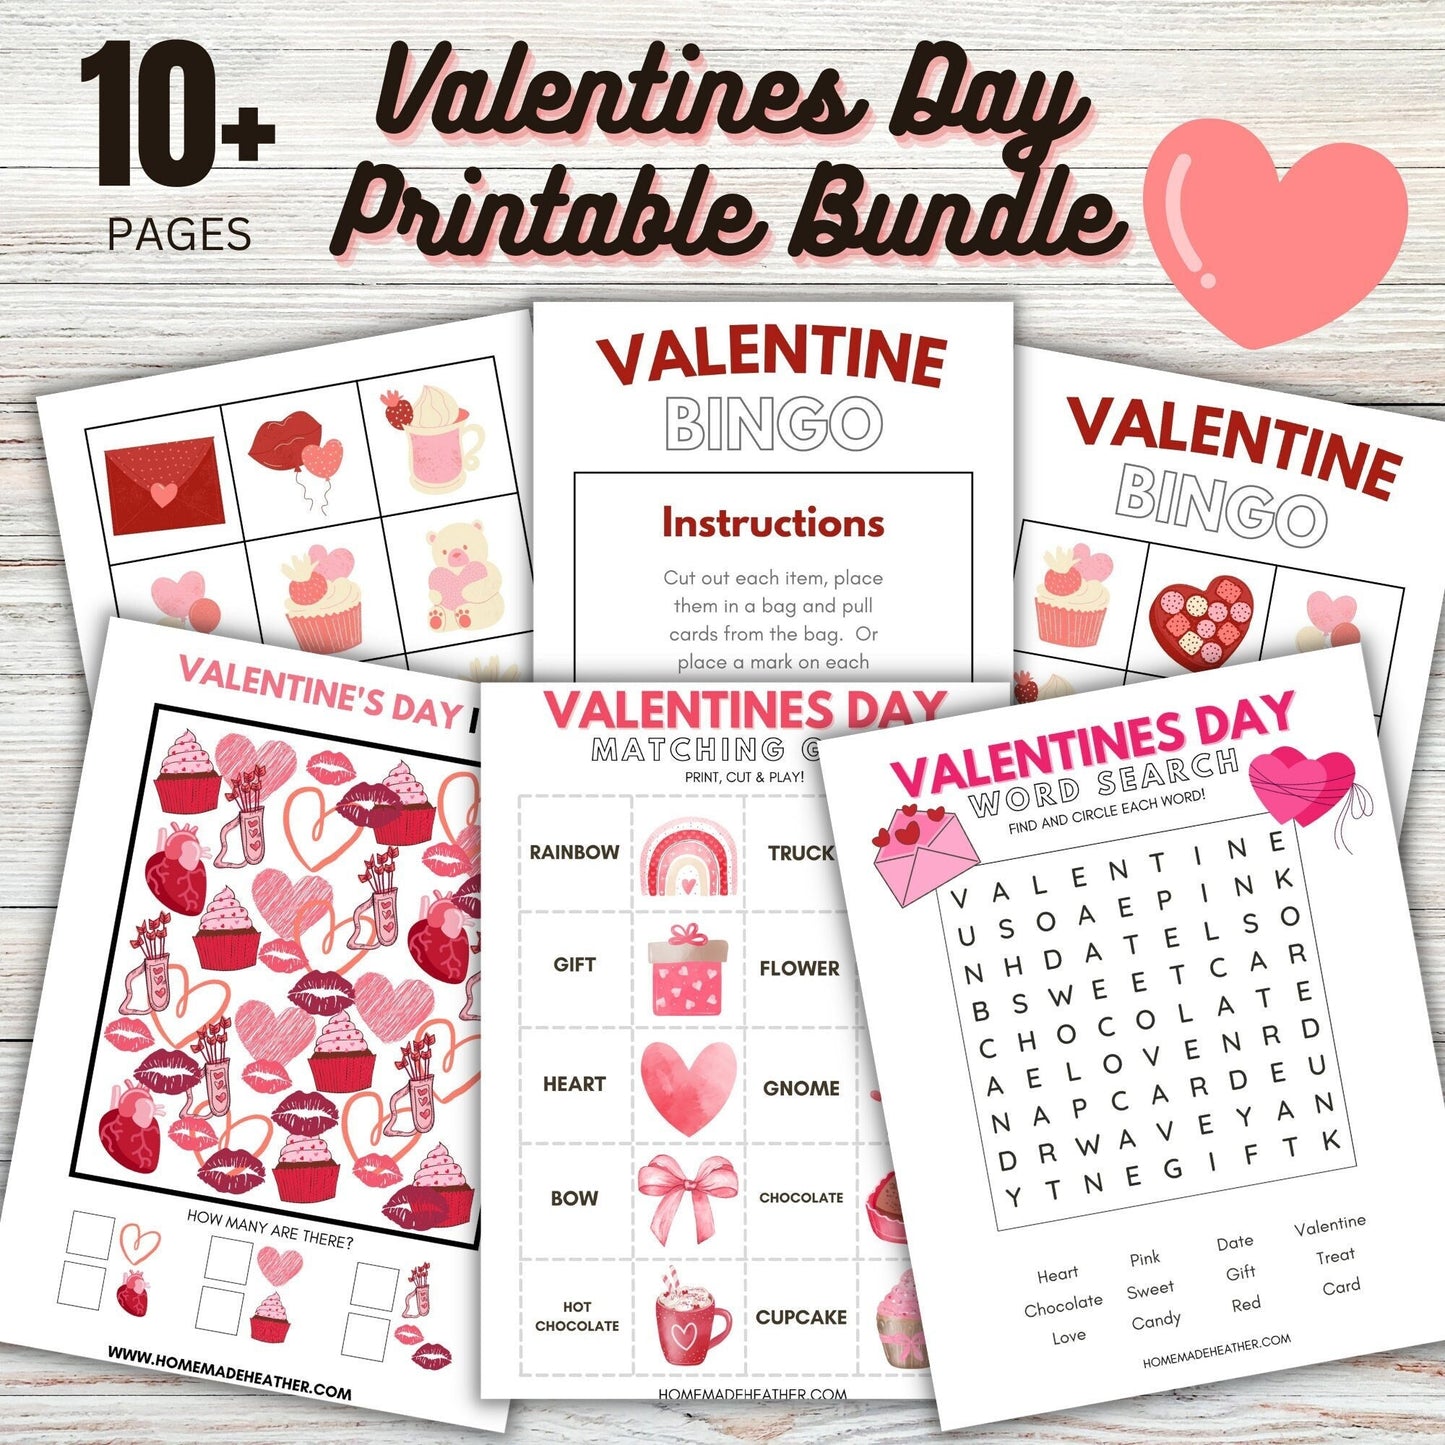 Valentines Day Printable Activity Bundle - Valentines Day Printable PDF - Instant Download